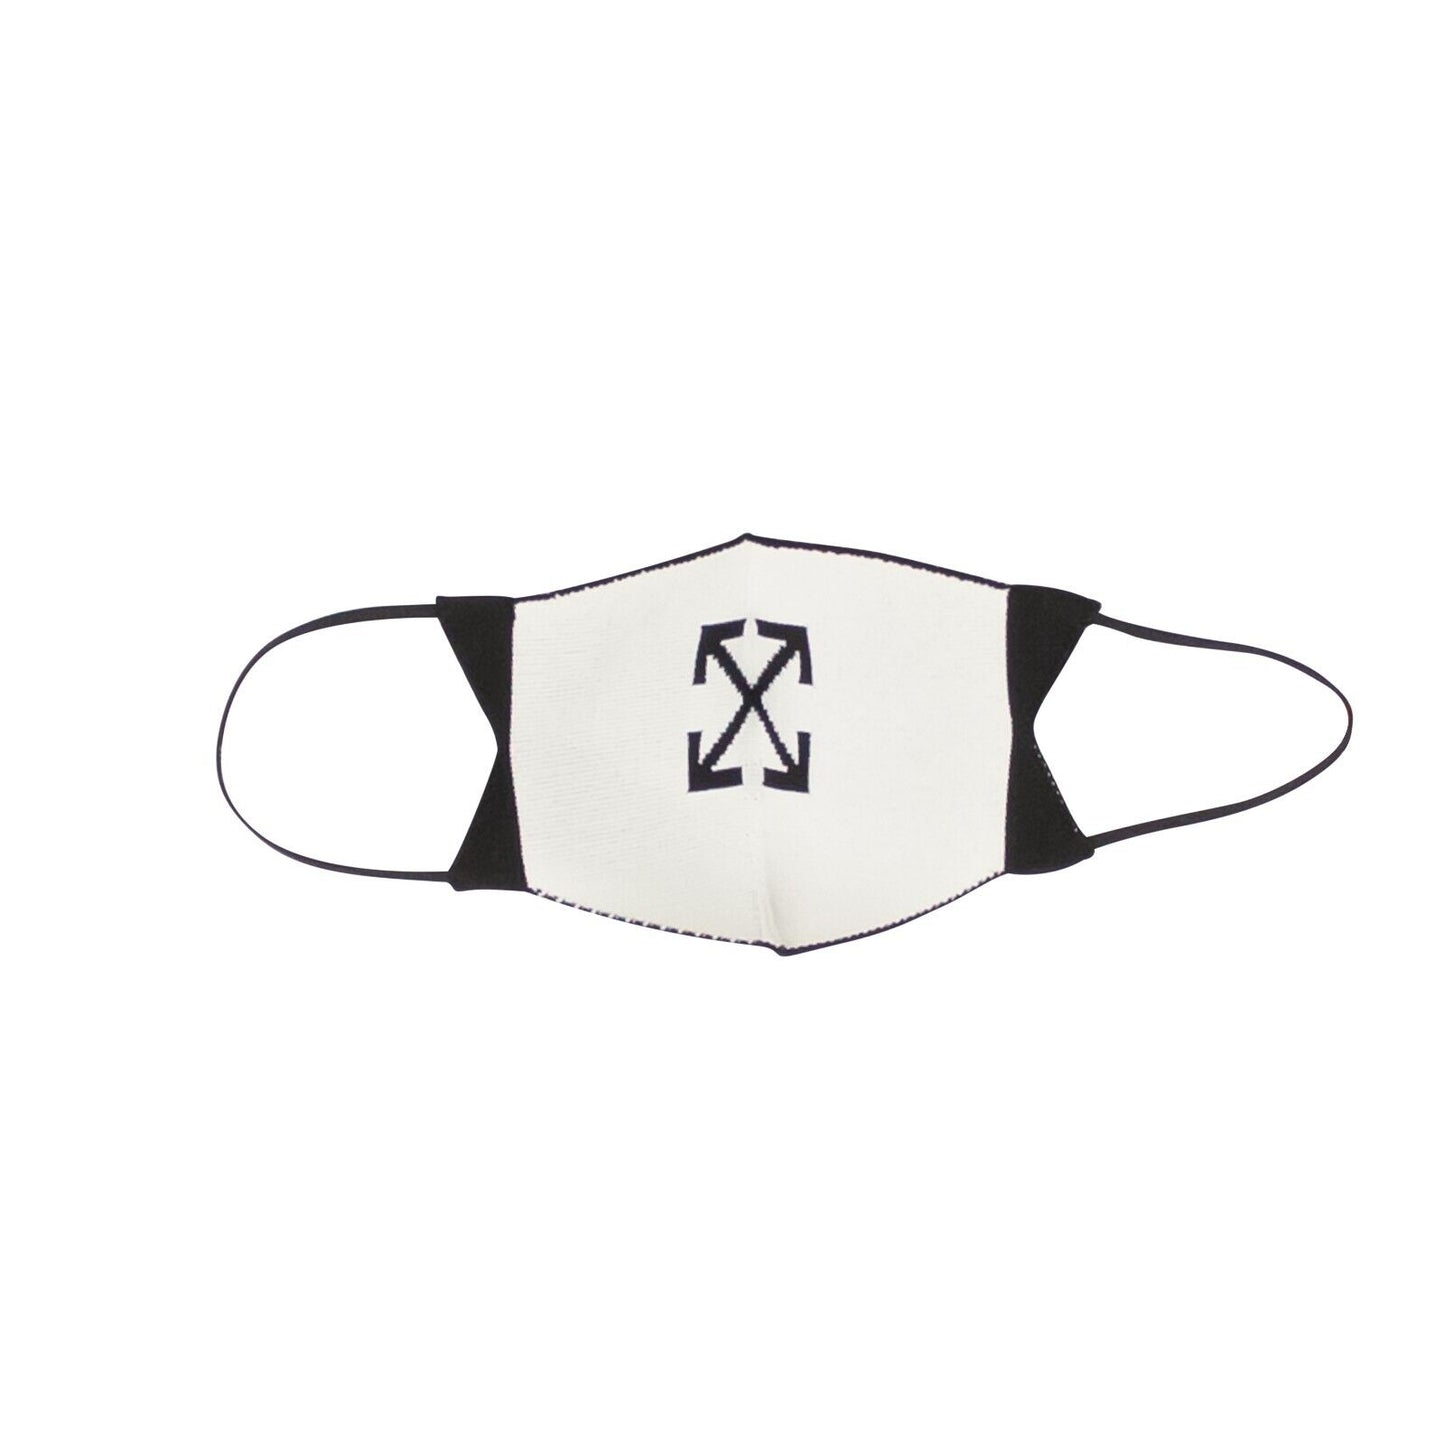 Off-White C/O Virgil Abloh Arrow Knit Simple Mask - Black/White